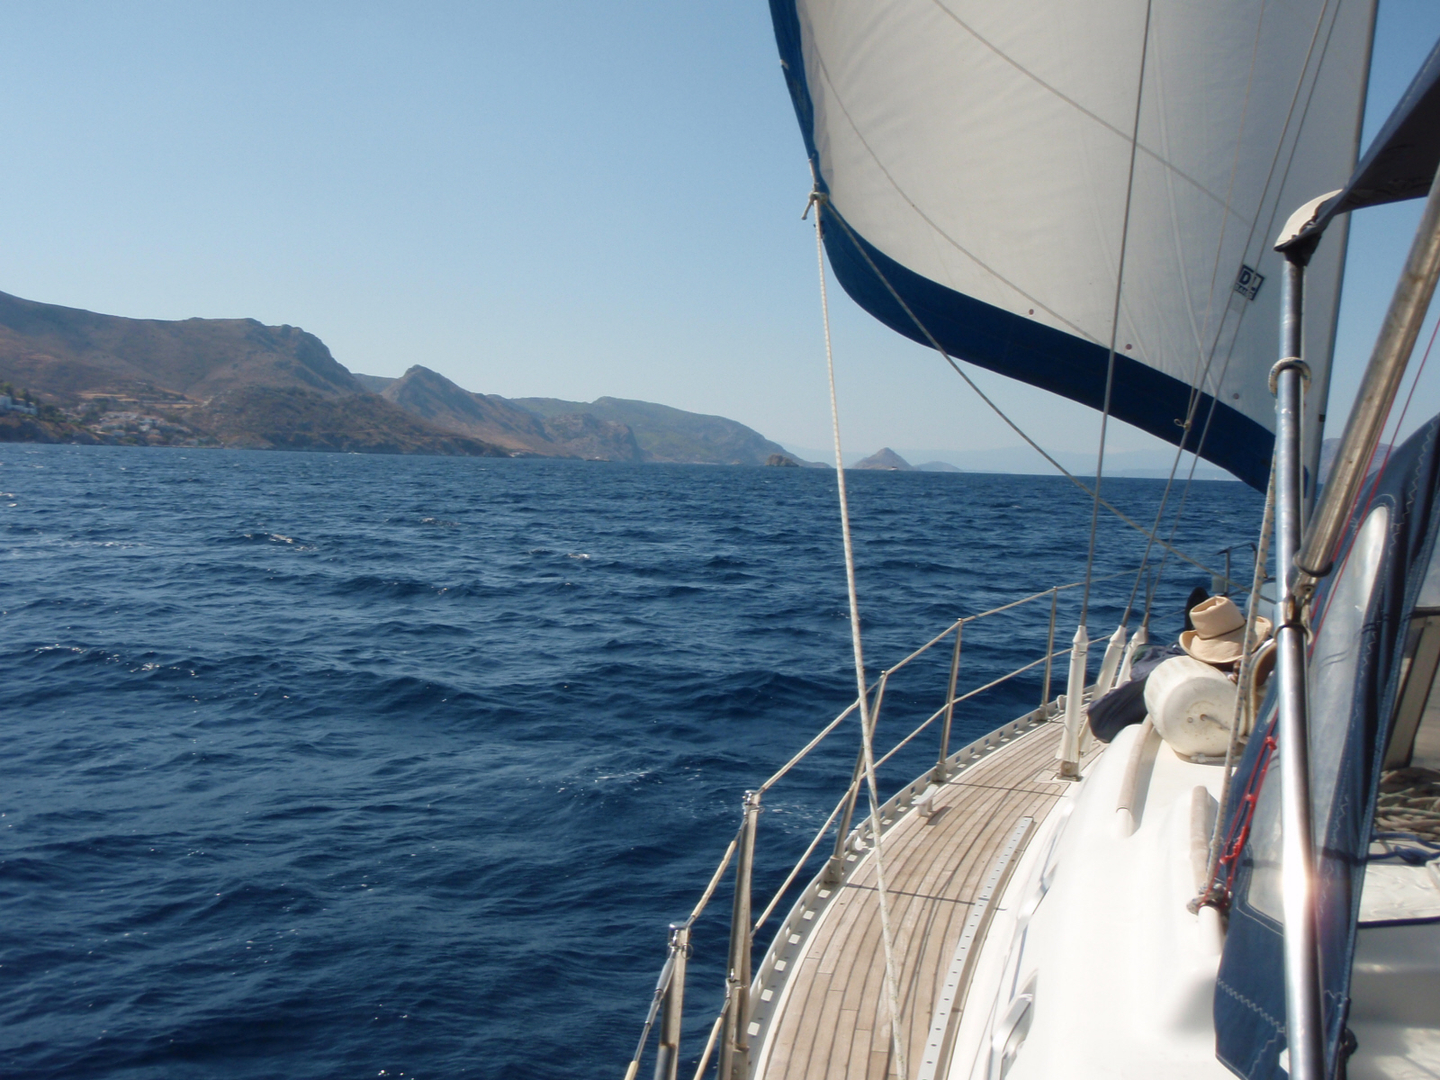 Sailing the Greek Isles